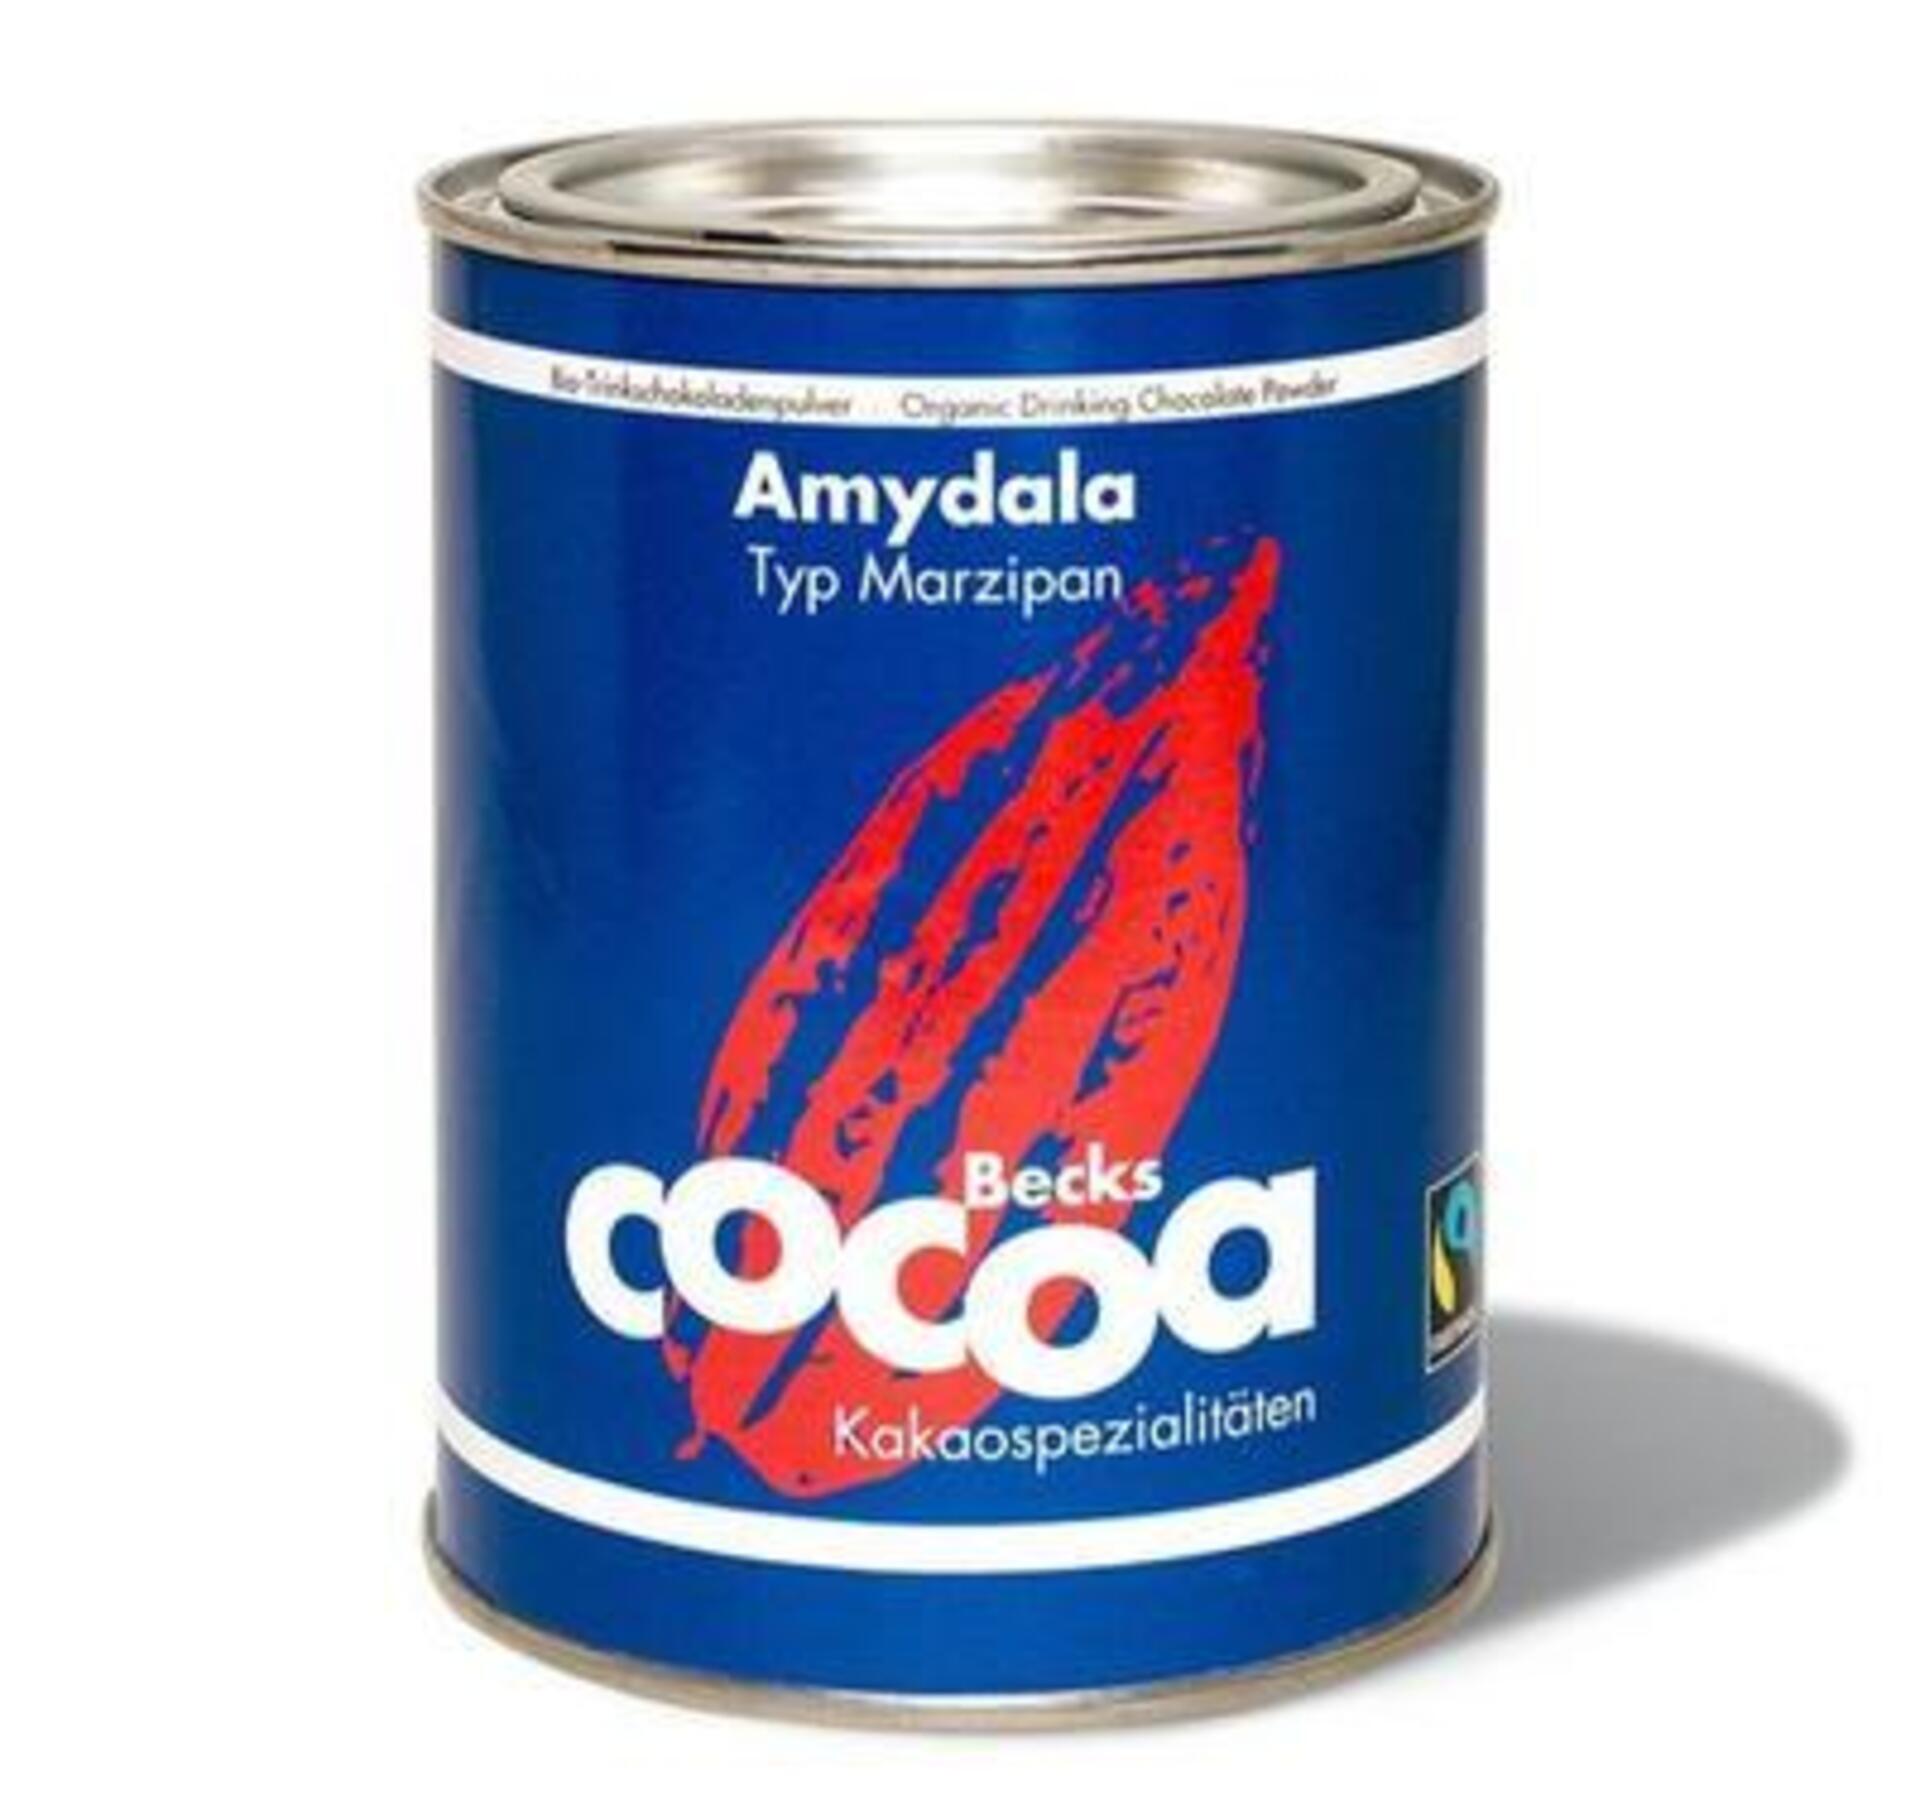 Becks Cocoa Rozpustná čok BIO Amydala s marcipánem  250g expirace